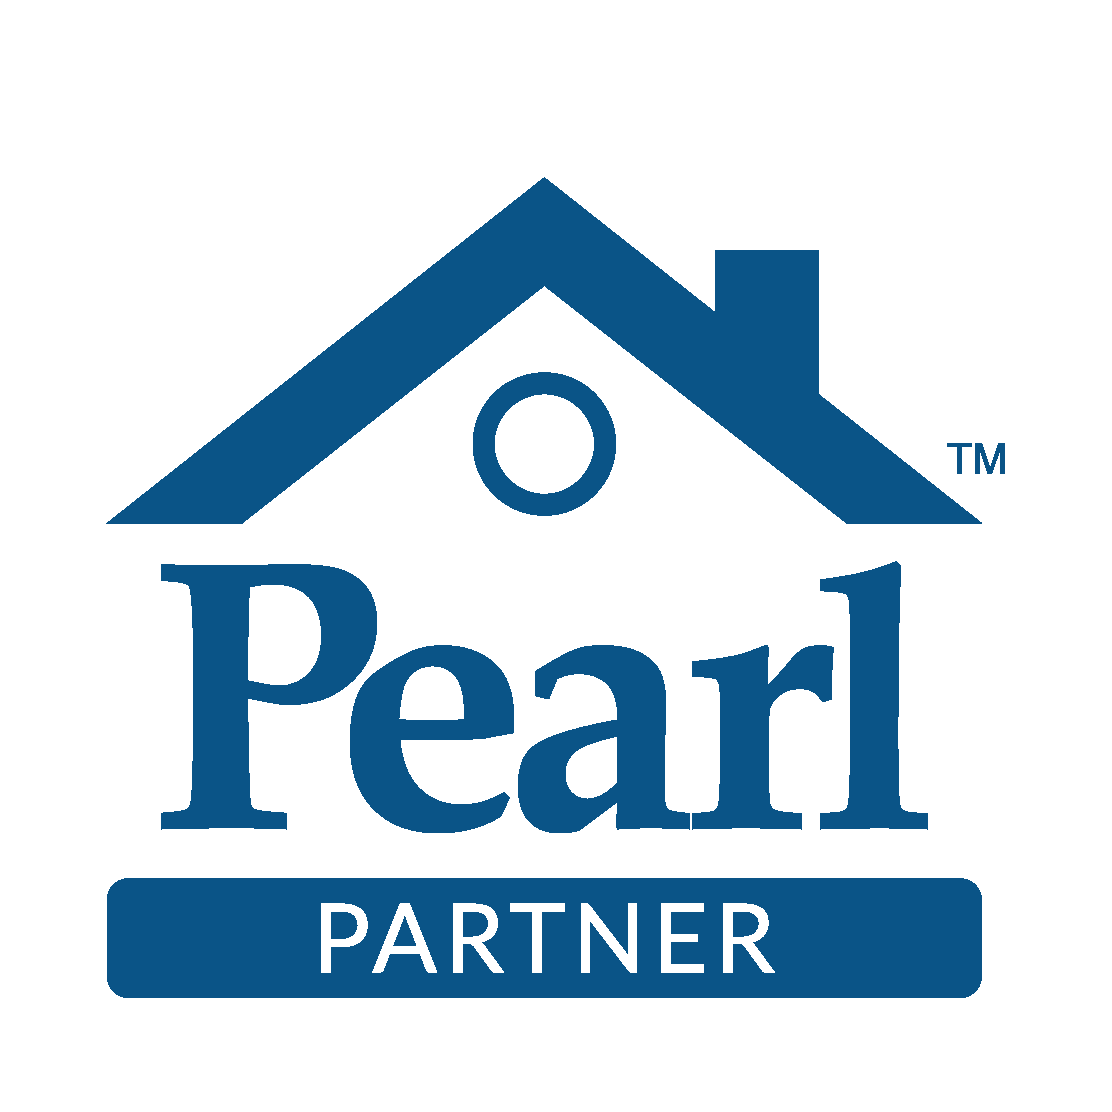 Pearl Partner